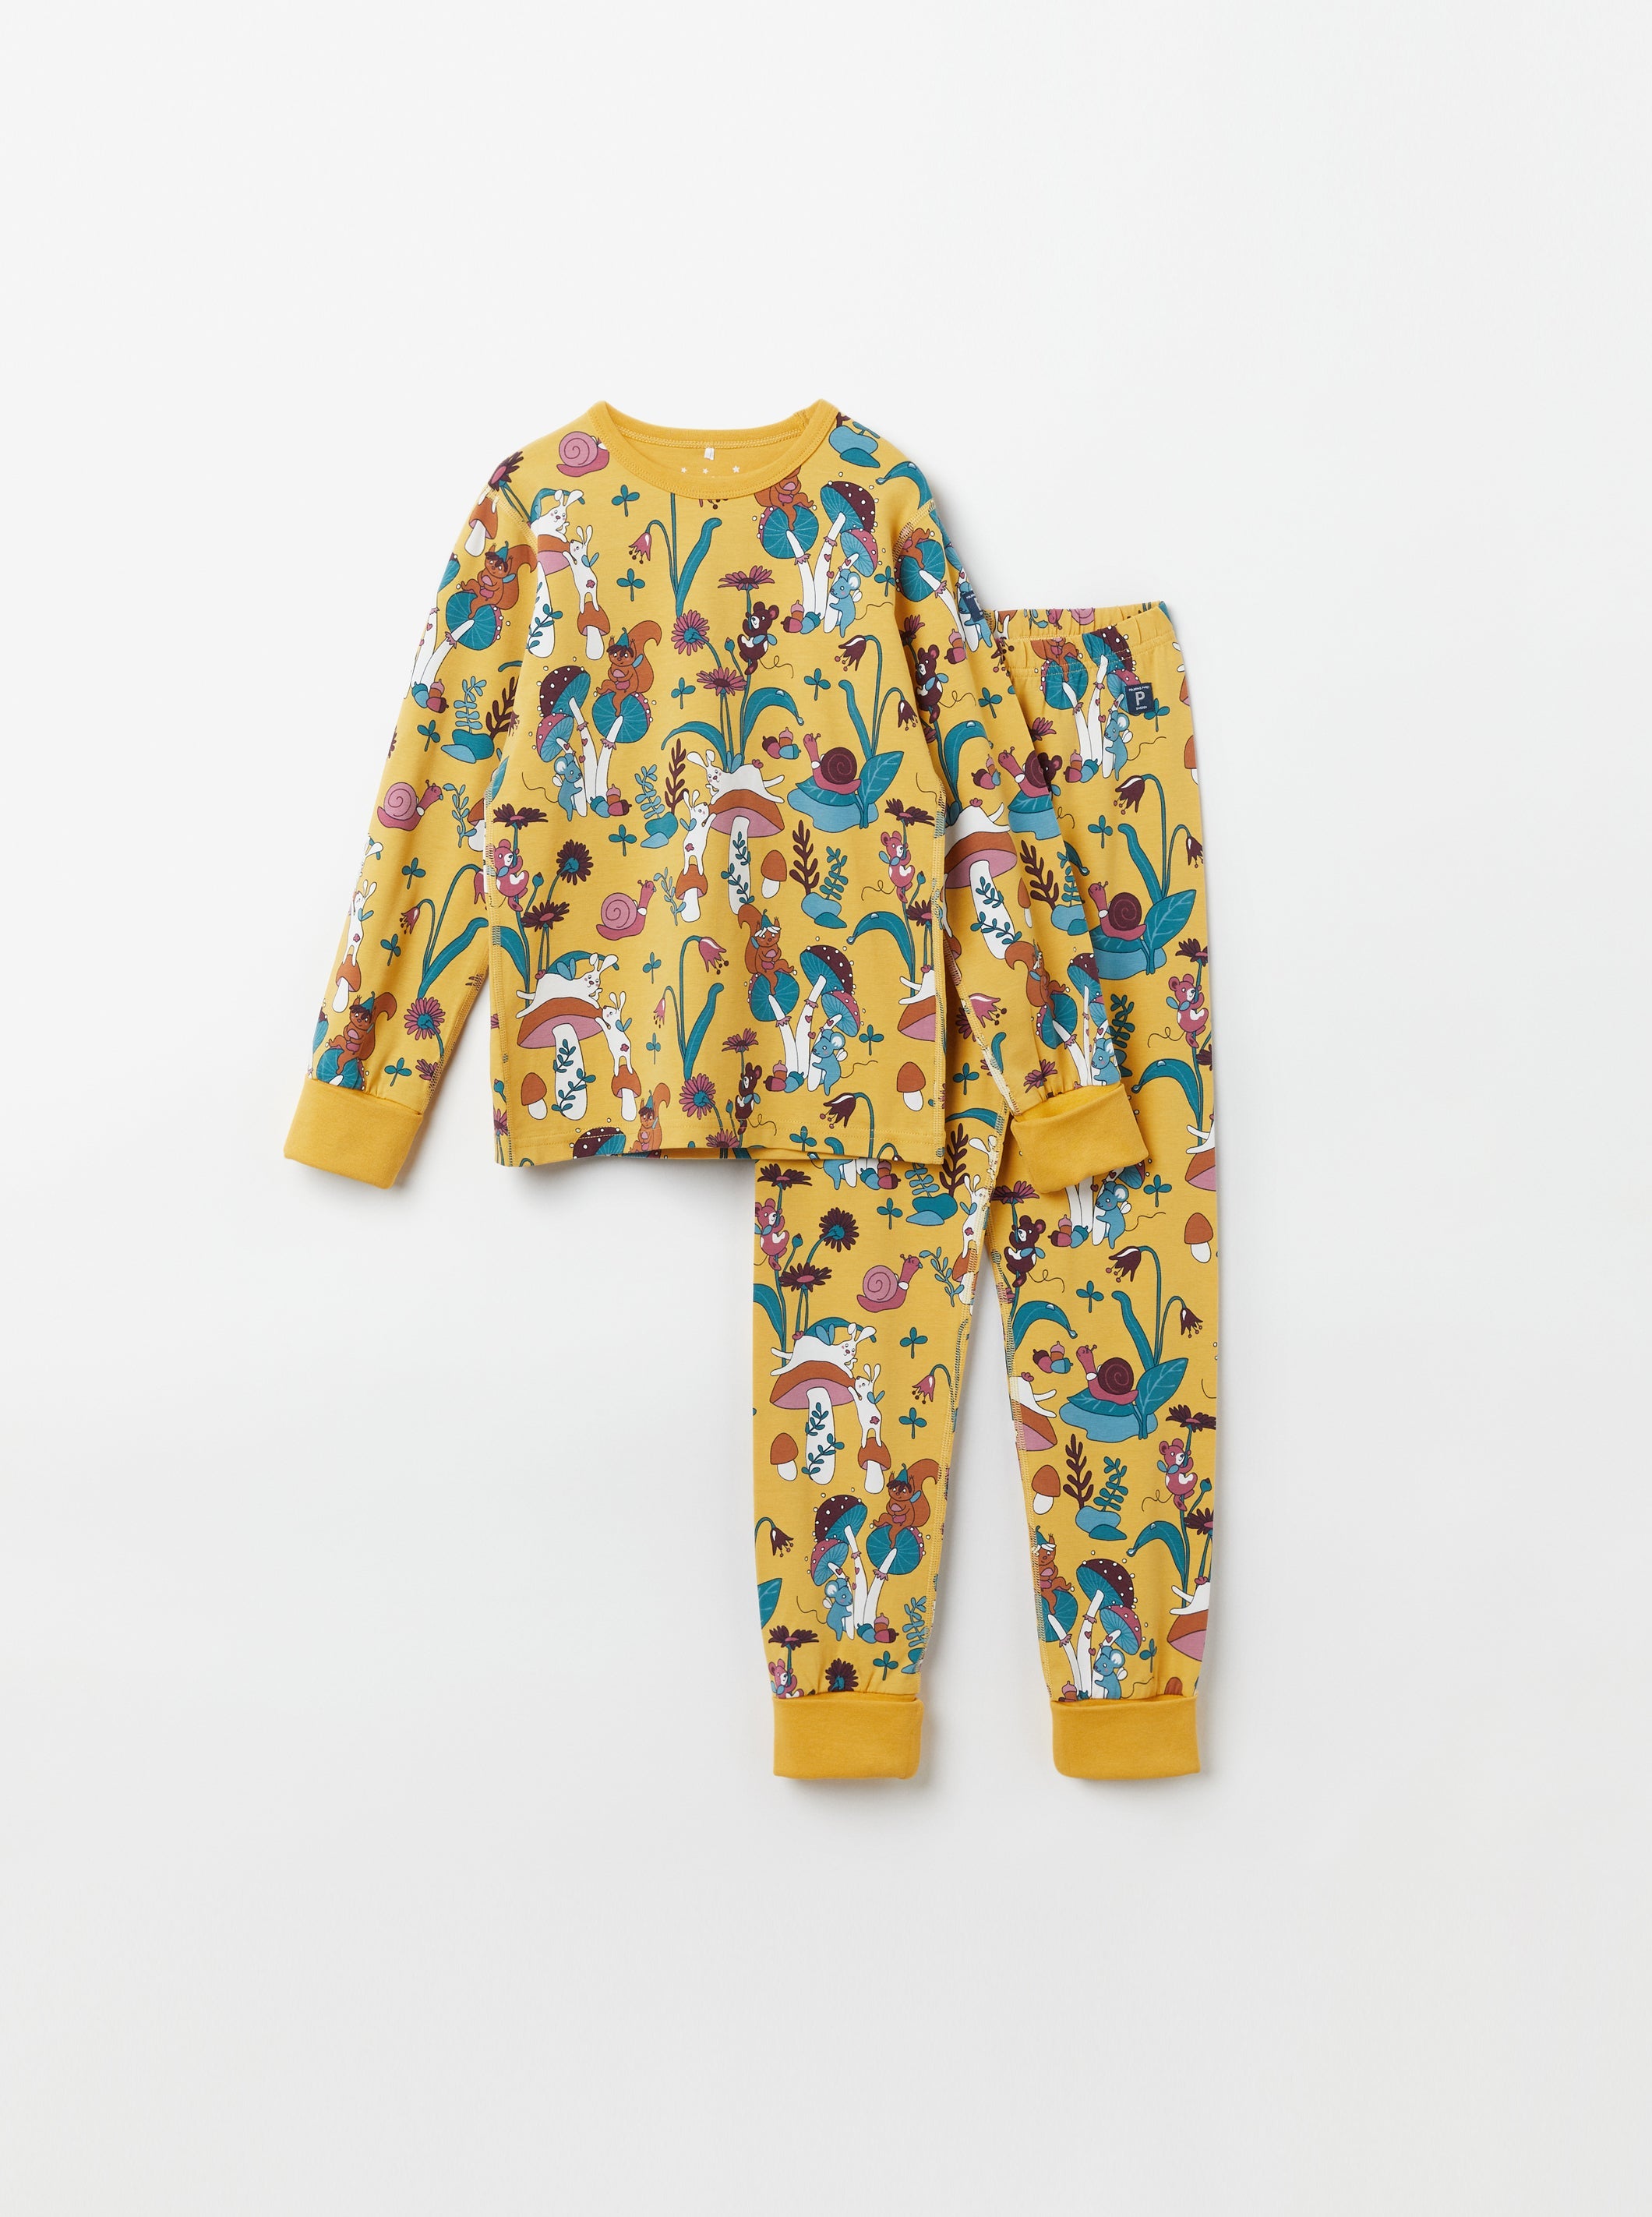 Wonderland Print Kids Pyjamas